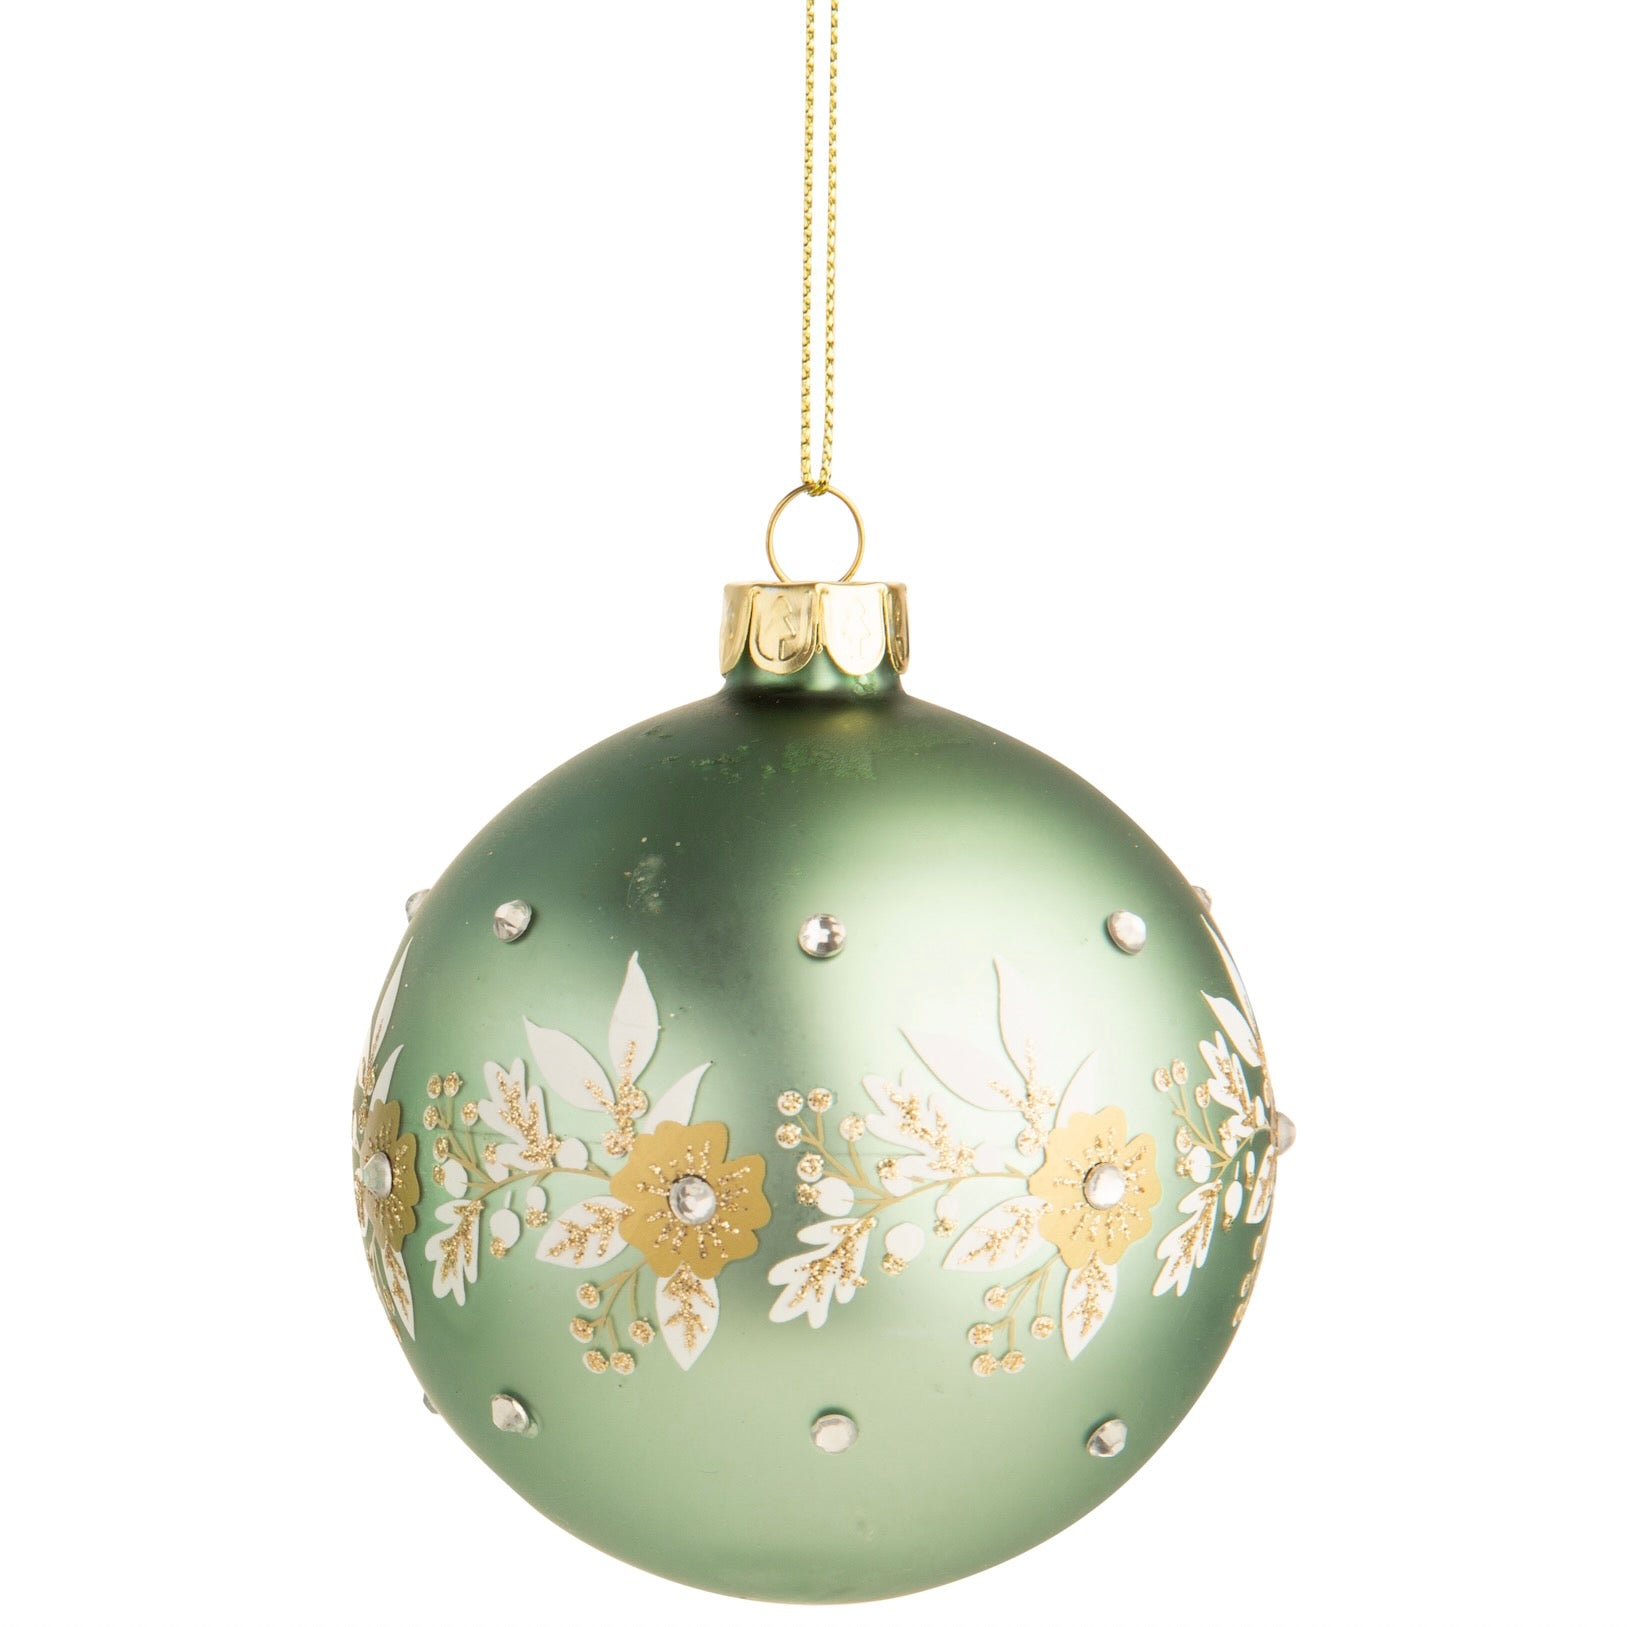 Matte Light Green Glass Ball Ornament with Gold Flowers